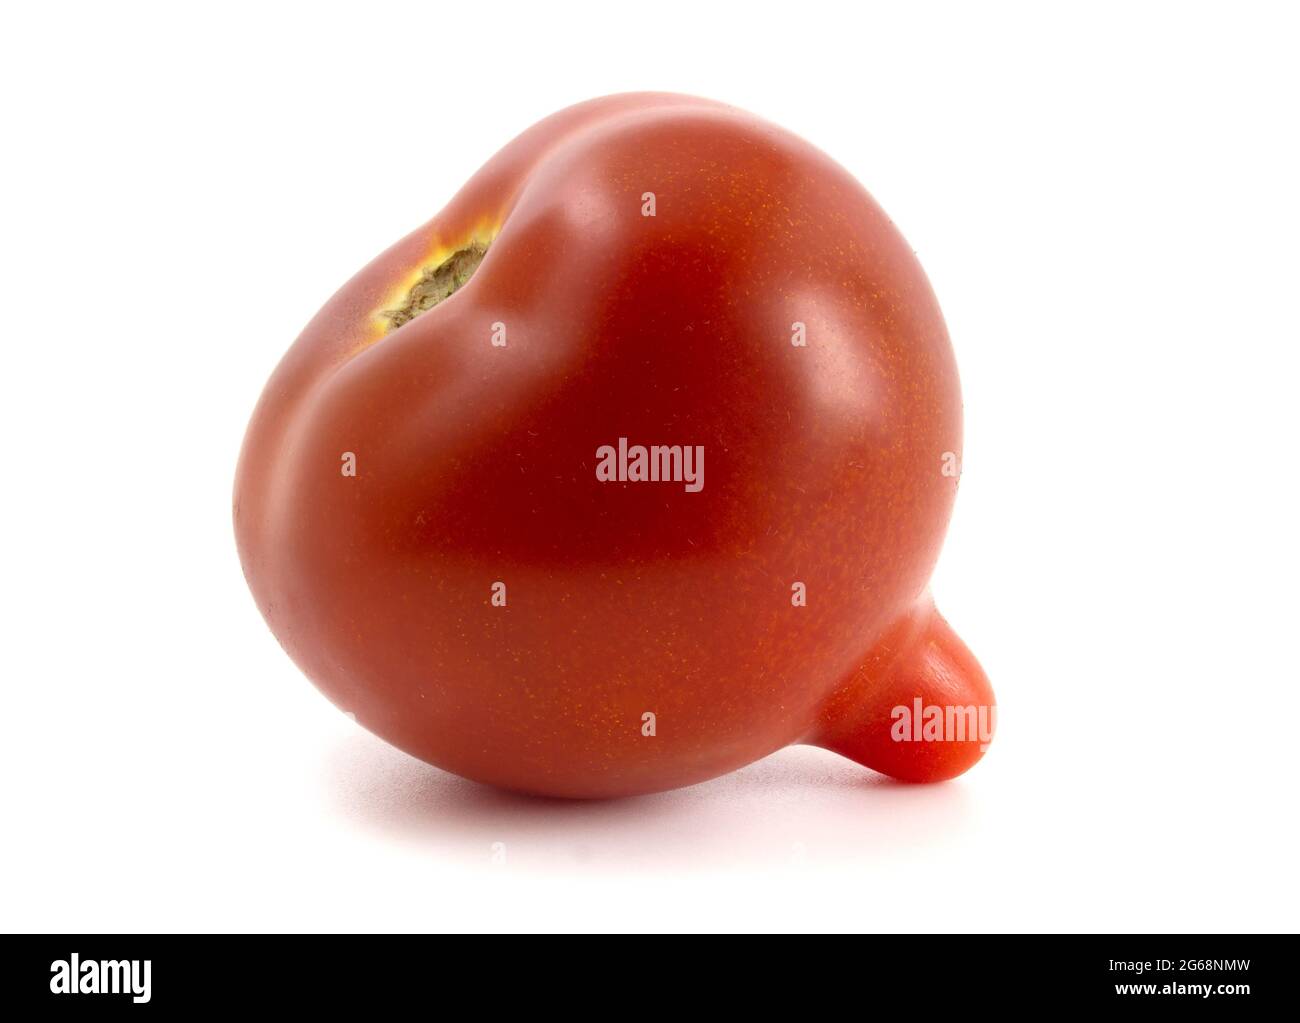 Fresh tomato with elongated tip isolated on white background. Stock Photo